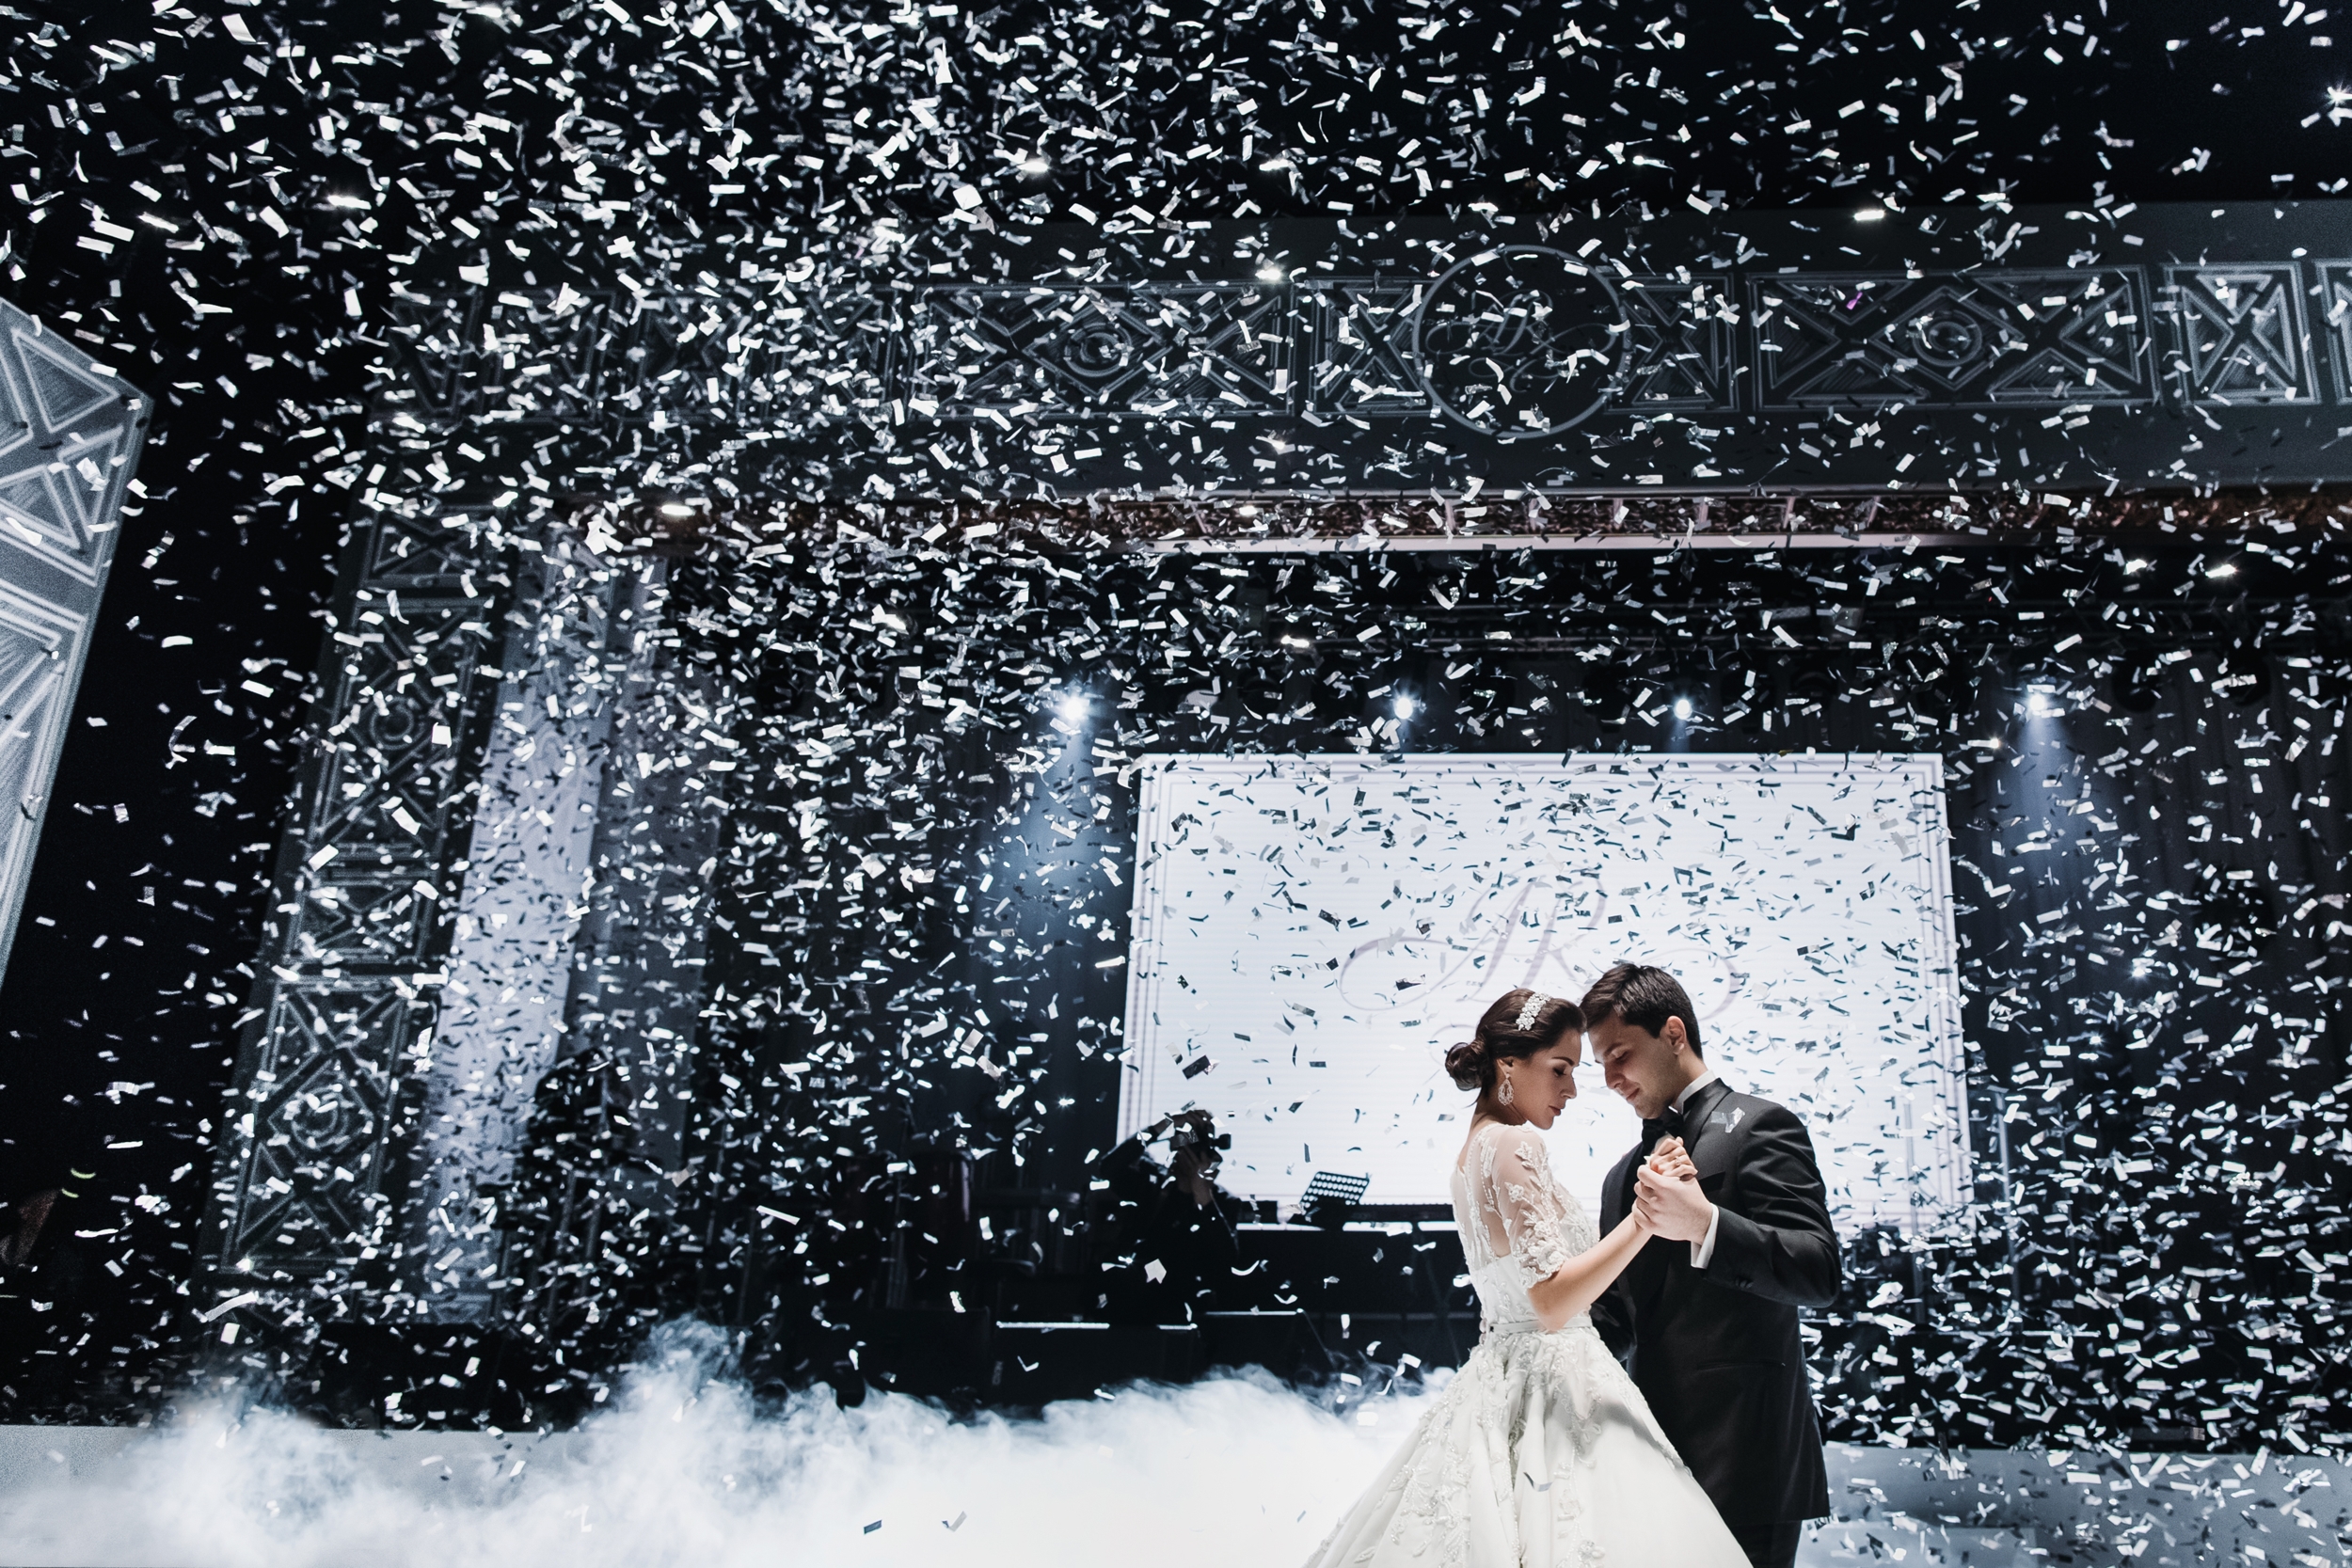 © Andrew Bayda Wedding Photography / Misha Moon Wedding Photography / JR Wedding Planner / Lidiya Simonova Decorator